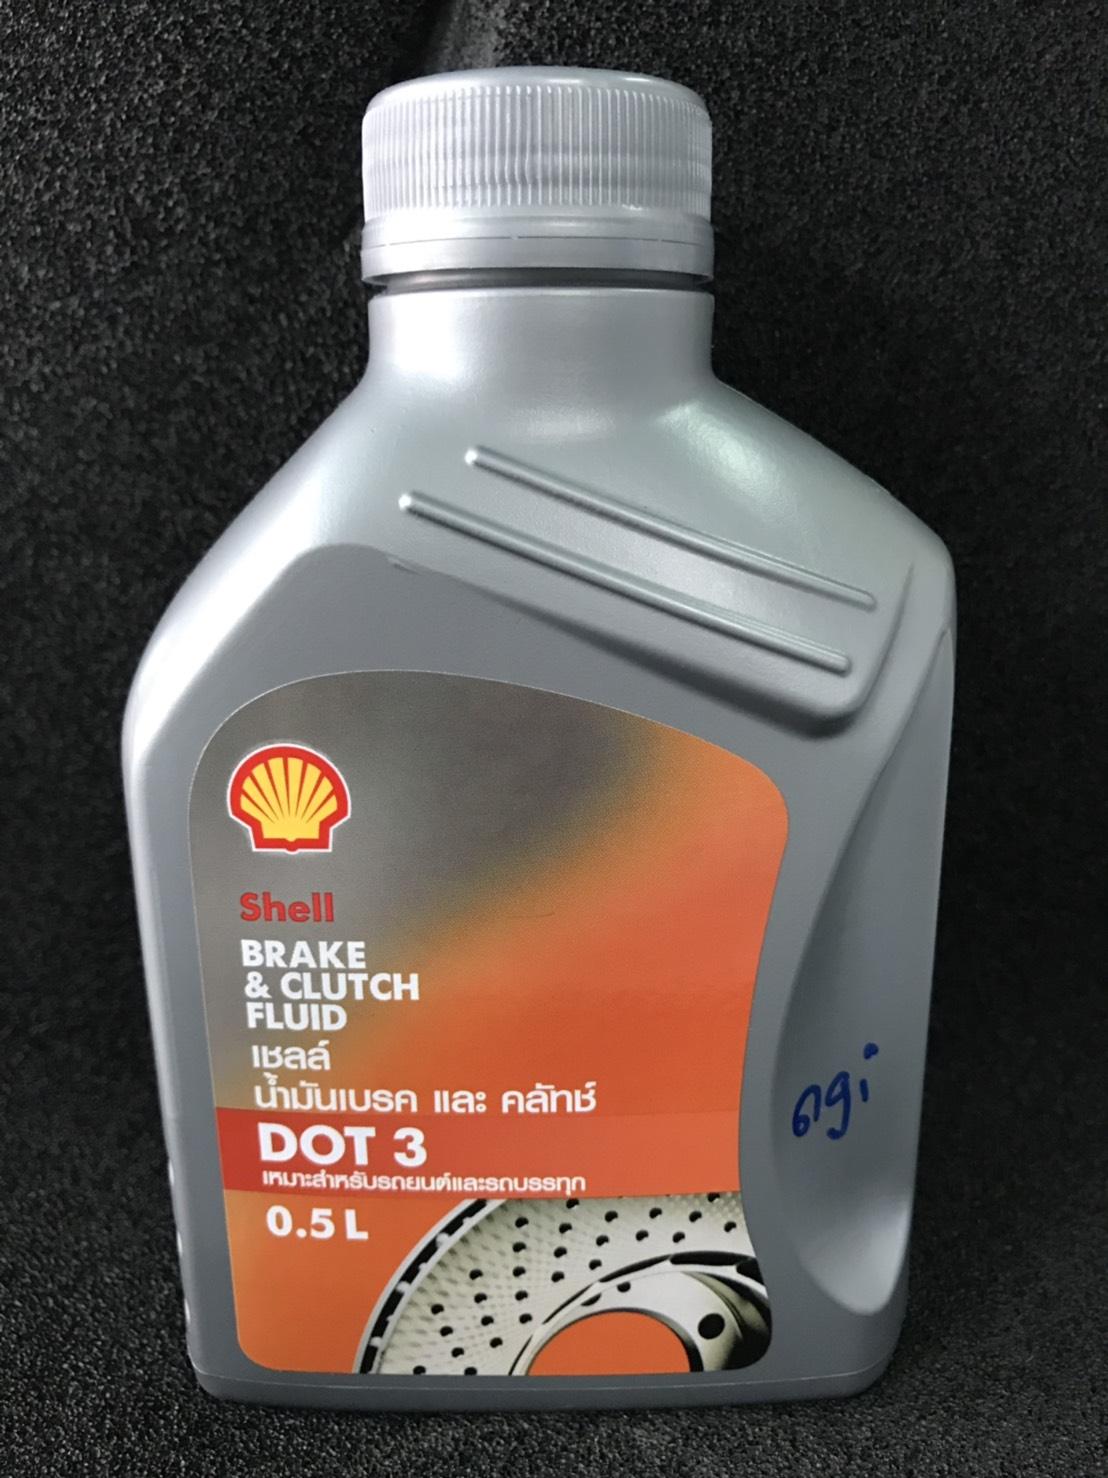 Dgreathome เชลล์ น้ำมันเบรก และ ครัทช์ DOT 3 ปริมาตร 0.5 ลิตร Shell brake & clutch fluid